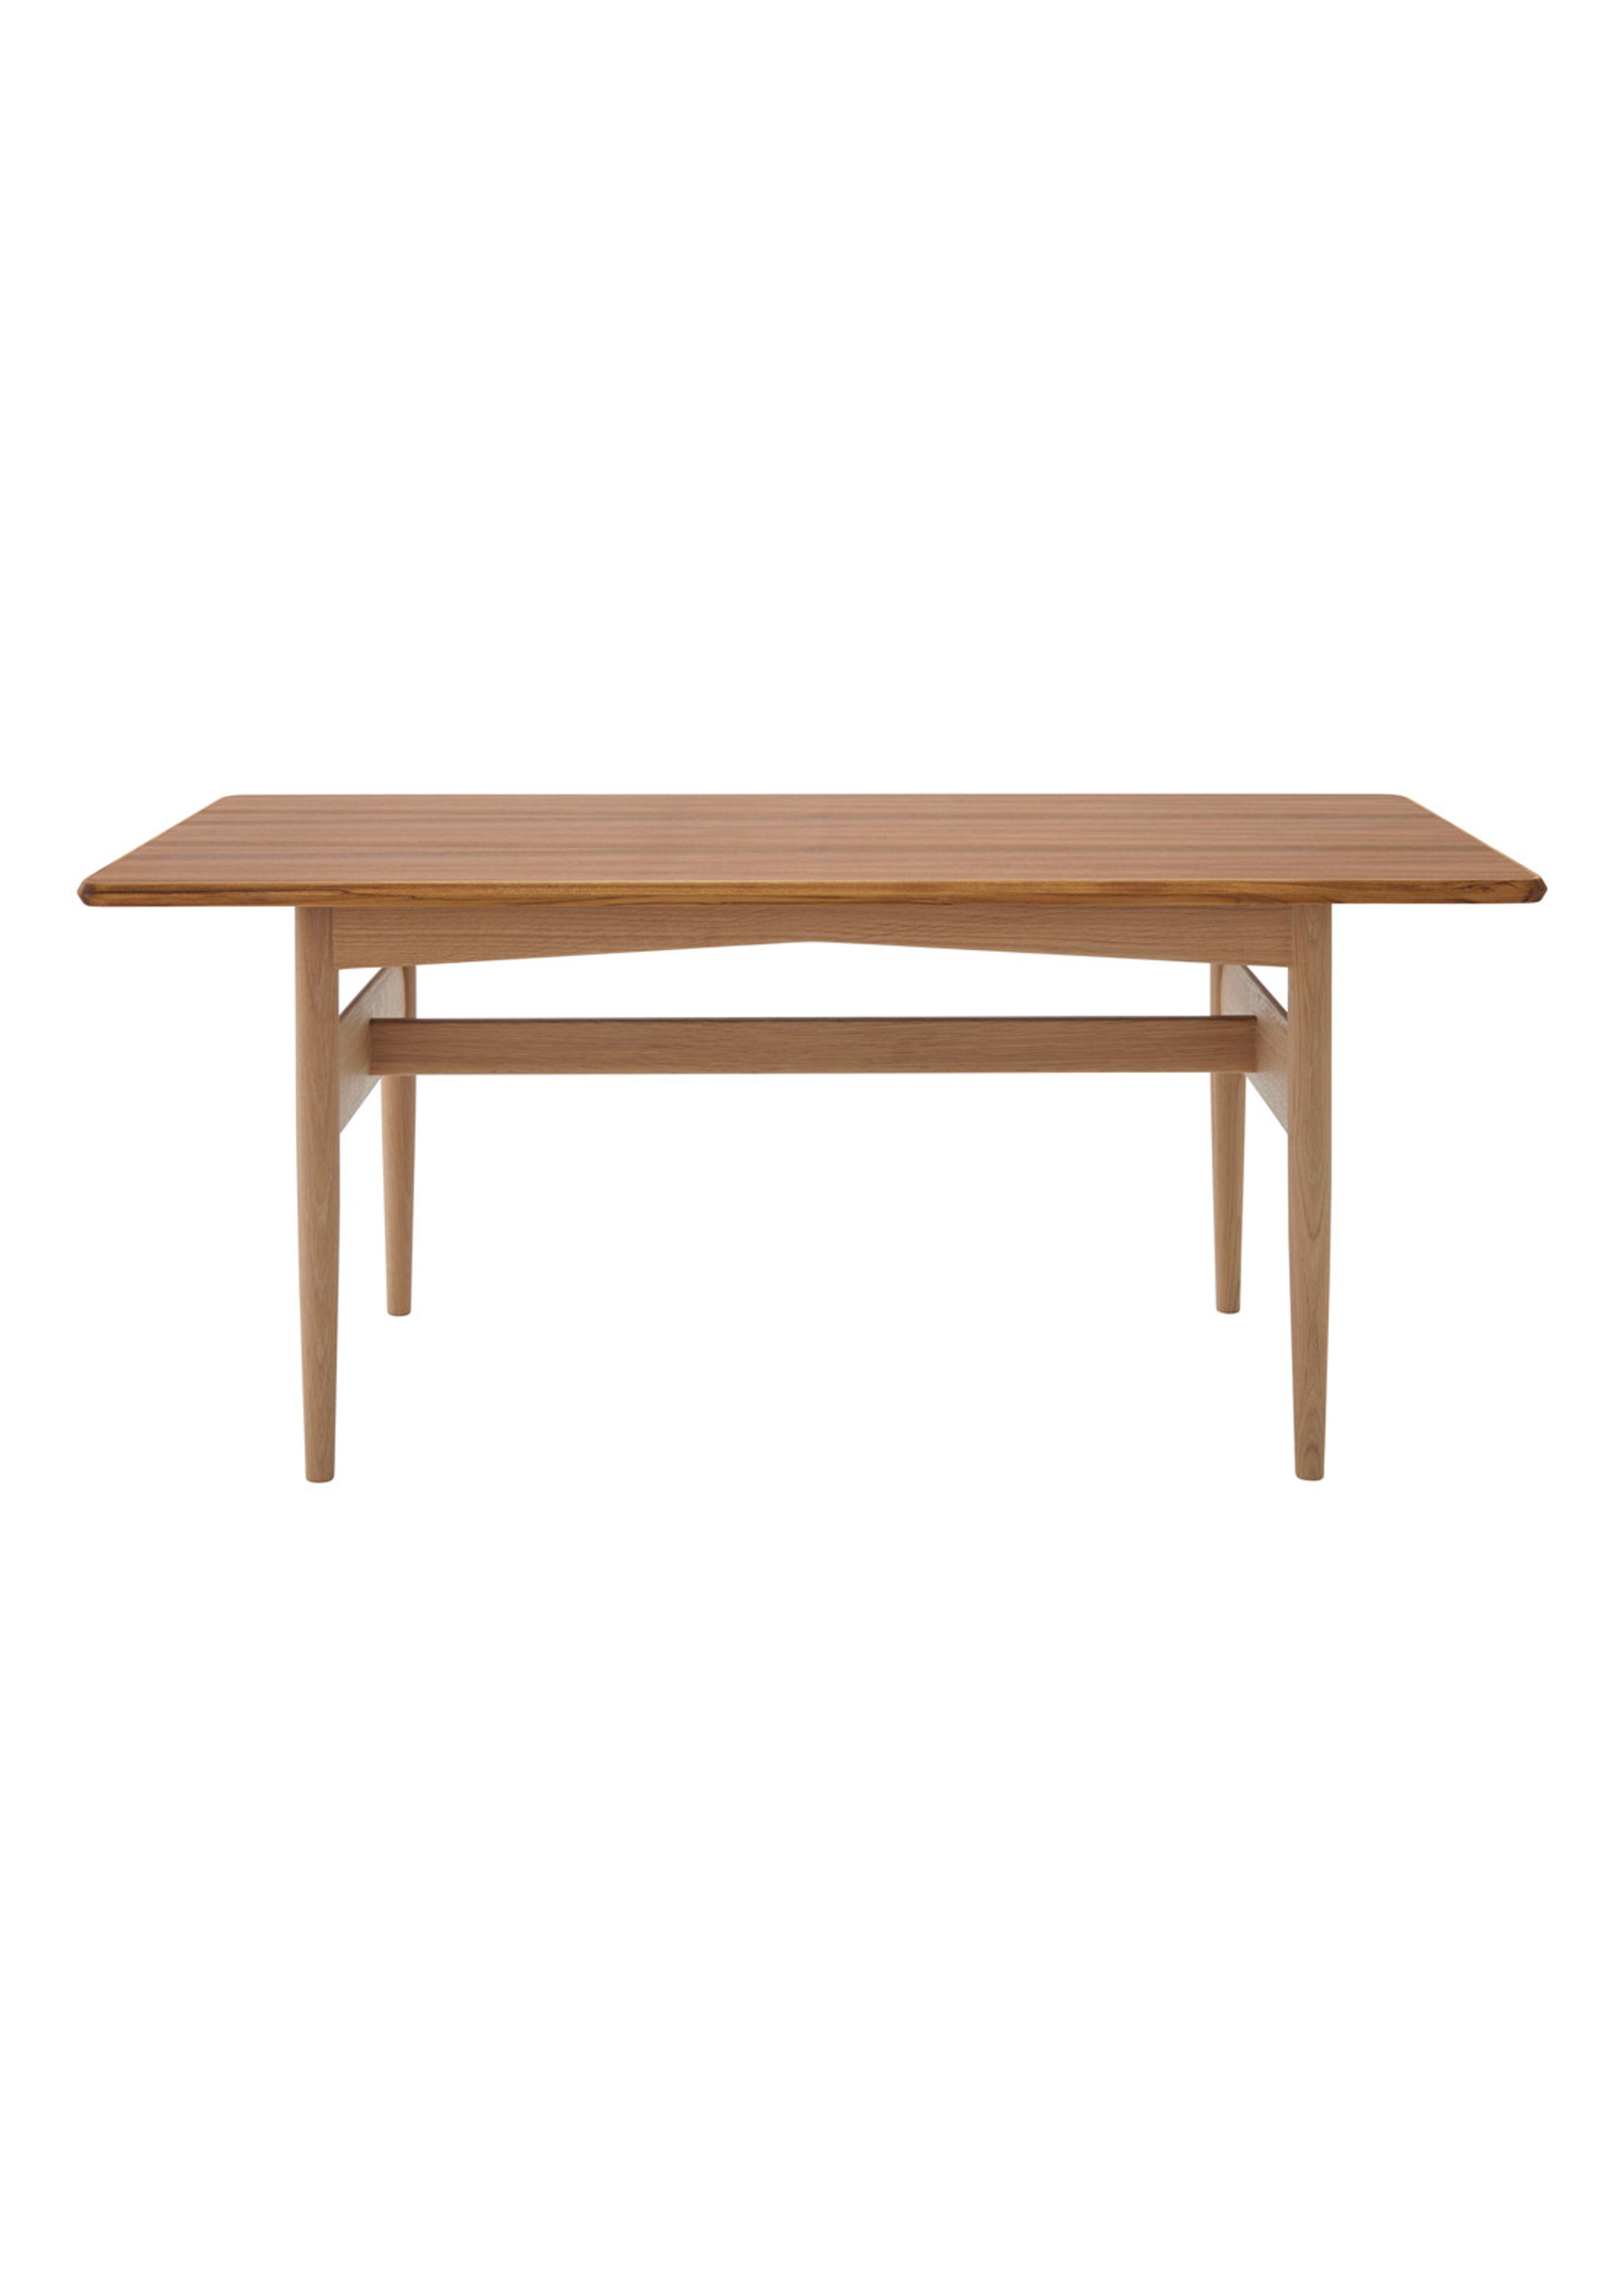 Magnus Olesen - Sofabord - Model 107 Coffee Table - Frame: White oiled oak / Table top: Oiled teak veneer w/solid teak edge